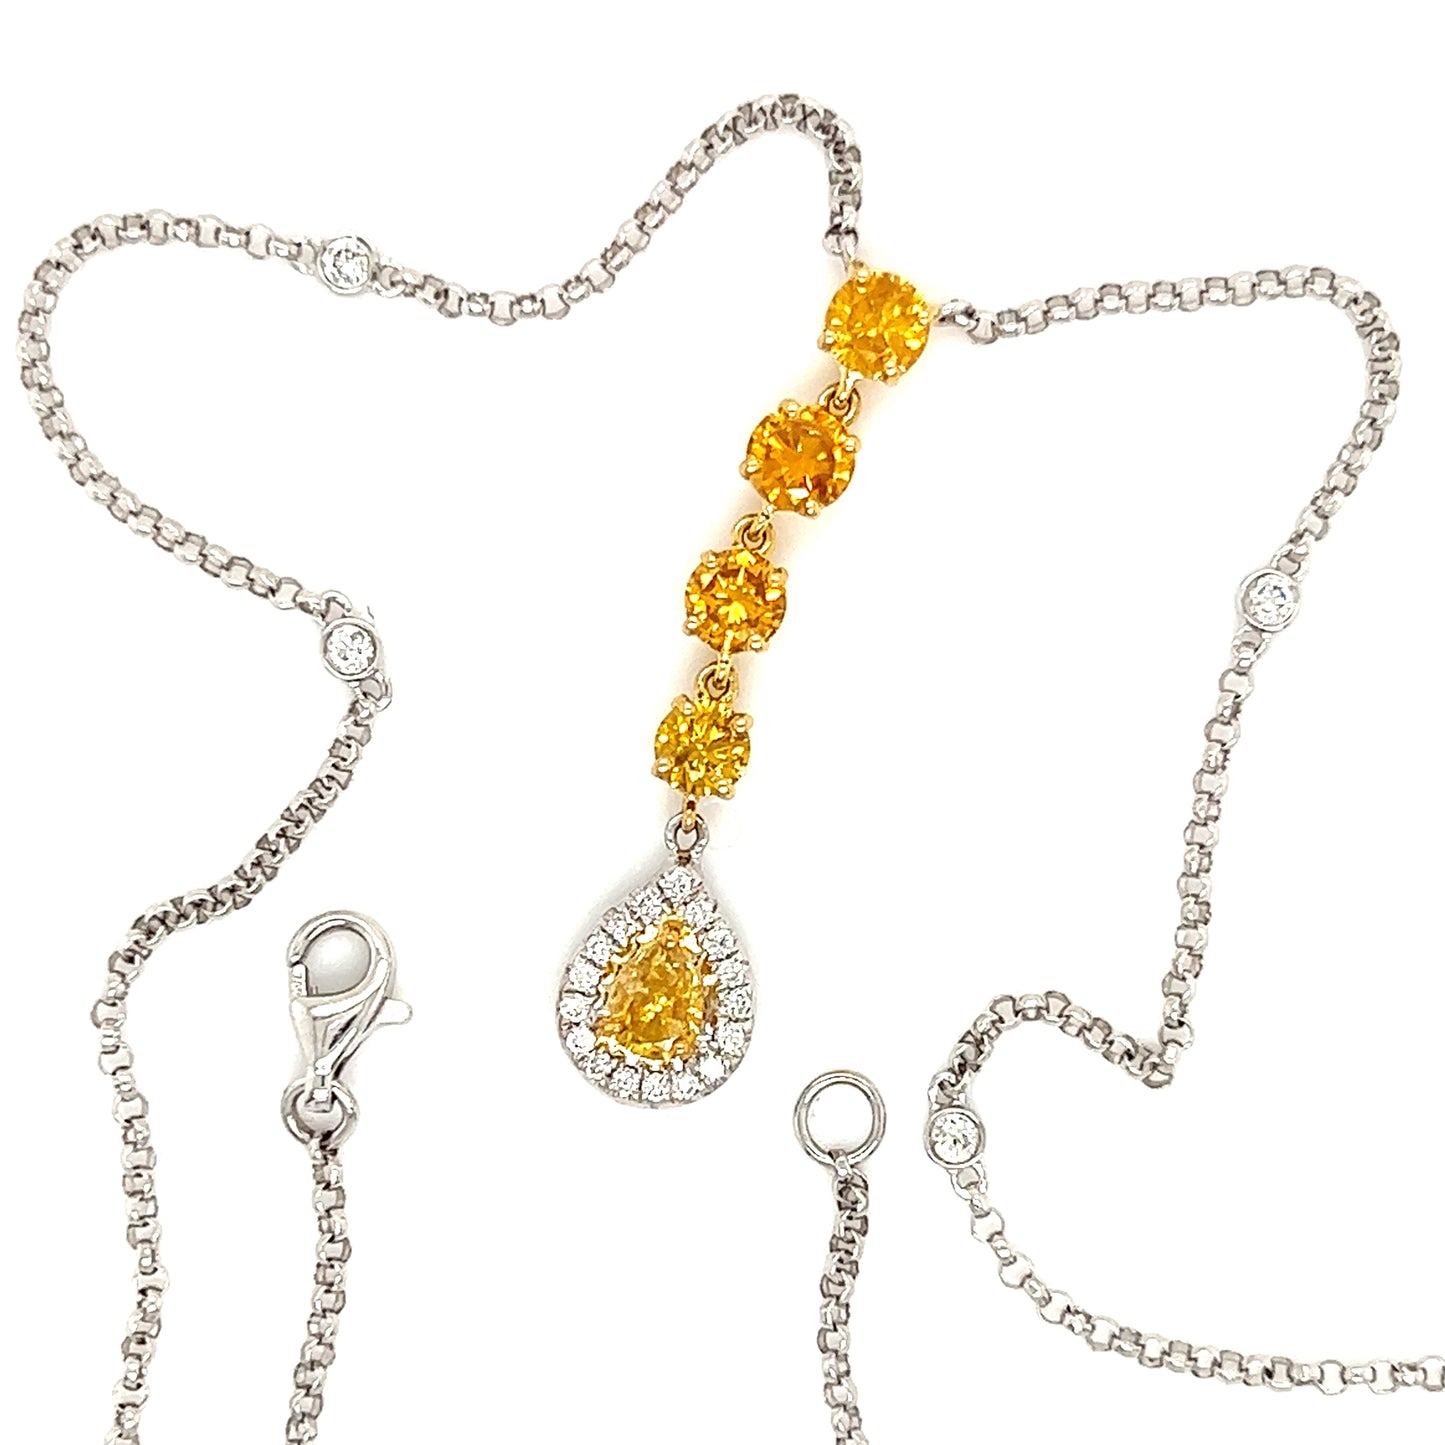 Yellow Diamond Necklace with Twenty One Diamonds in 18K White Gold Alternative Top View